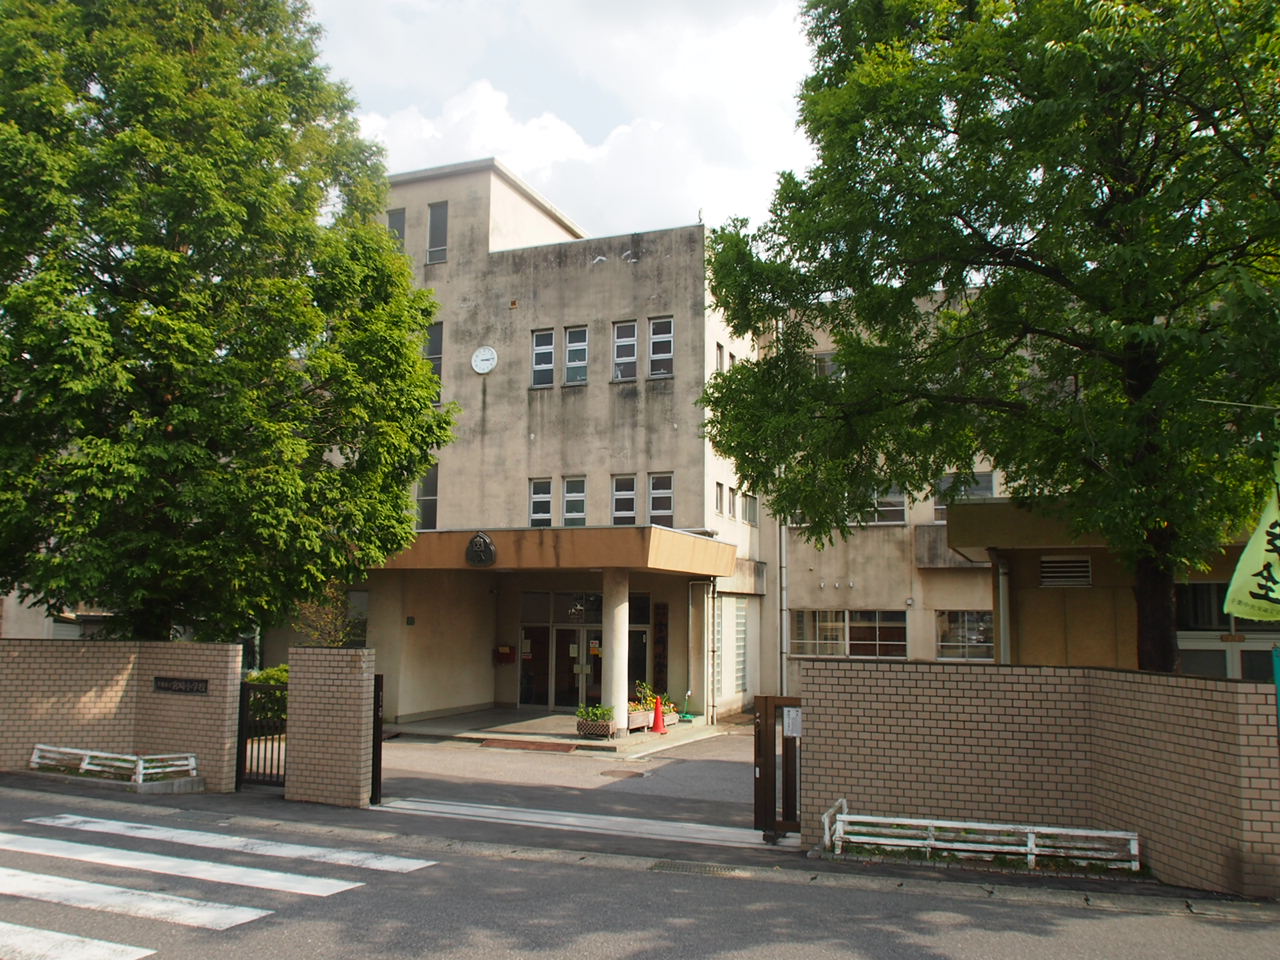 Primary school. Miyazaki to elementary school (elementary school) 842m